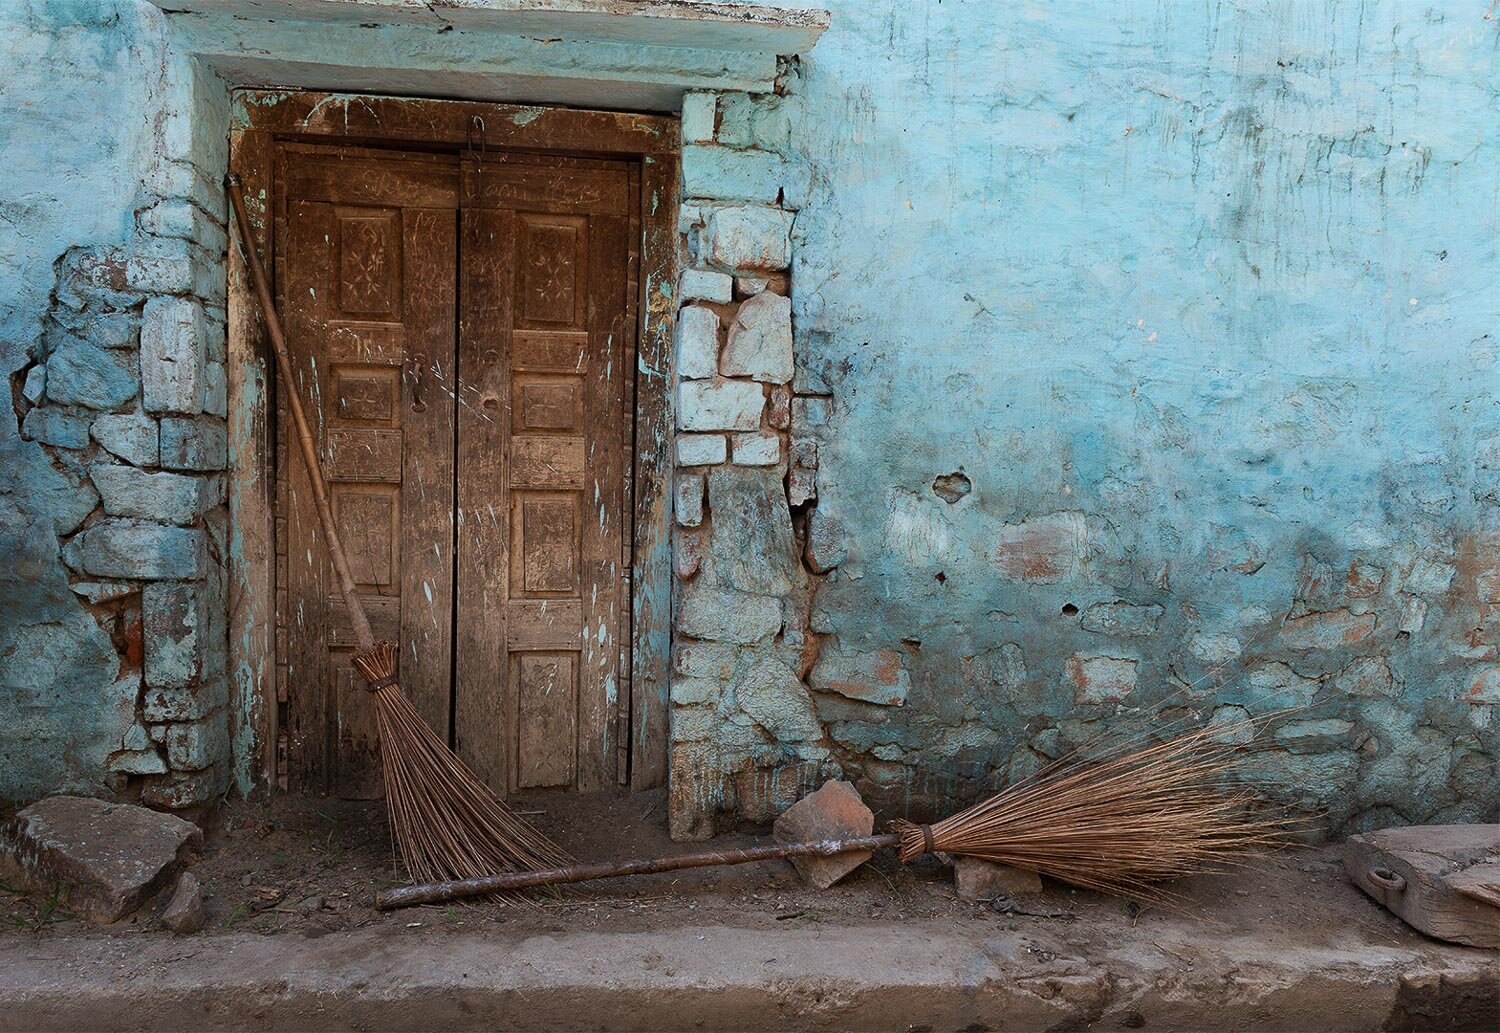 Door, wall and two brooms, Nandgaon, India